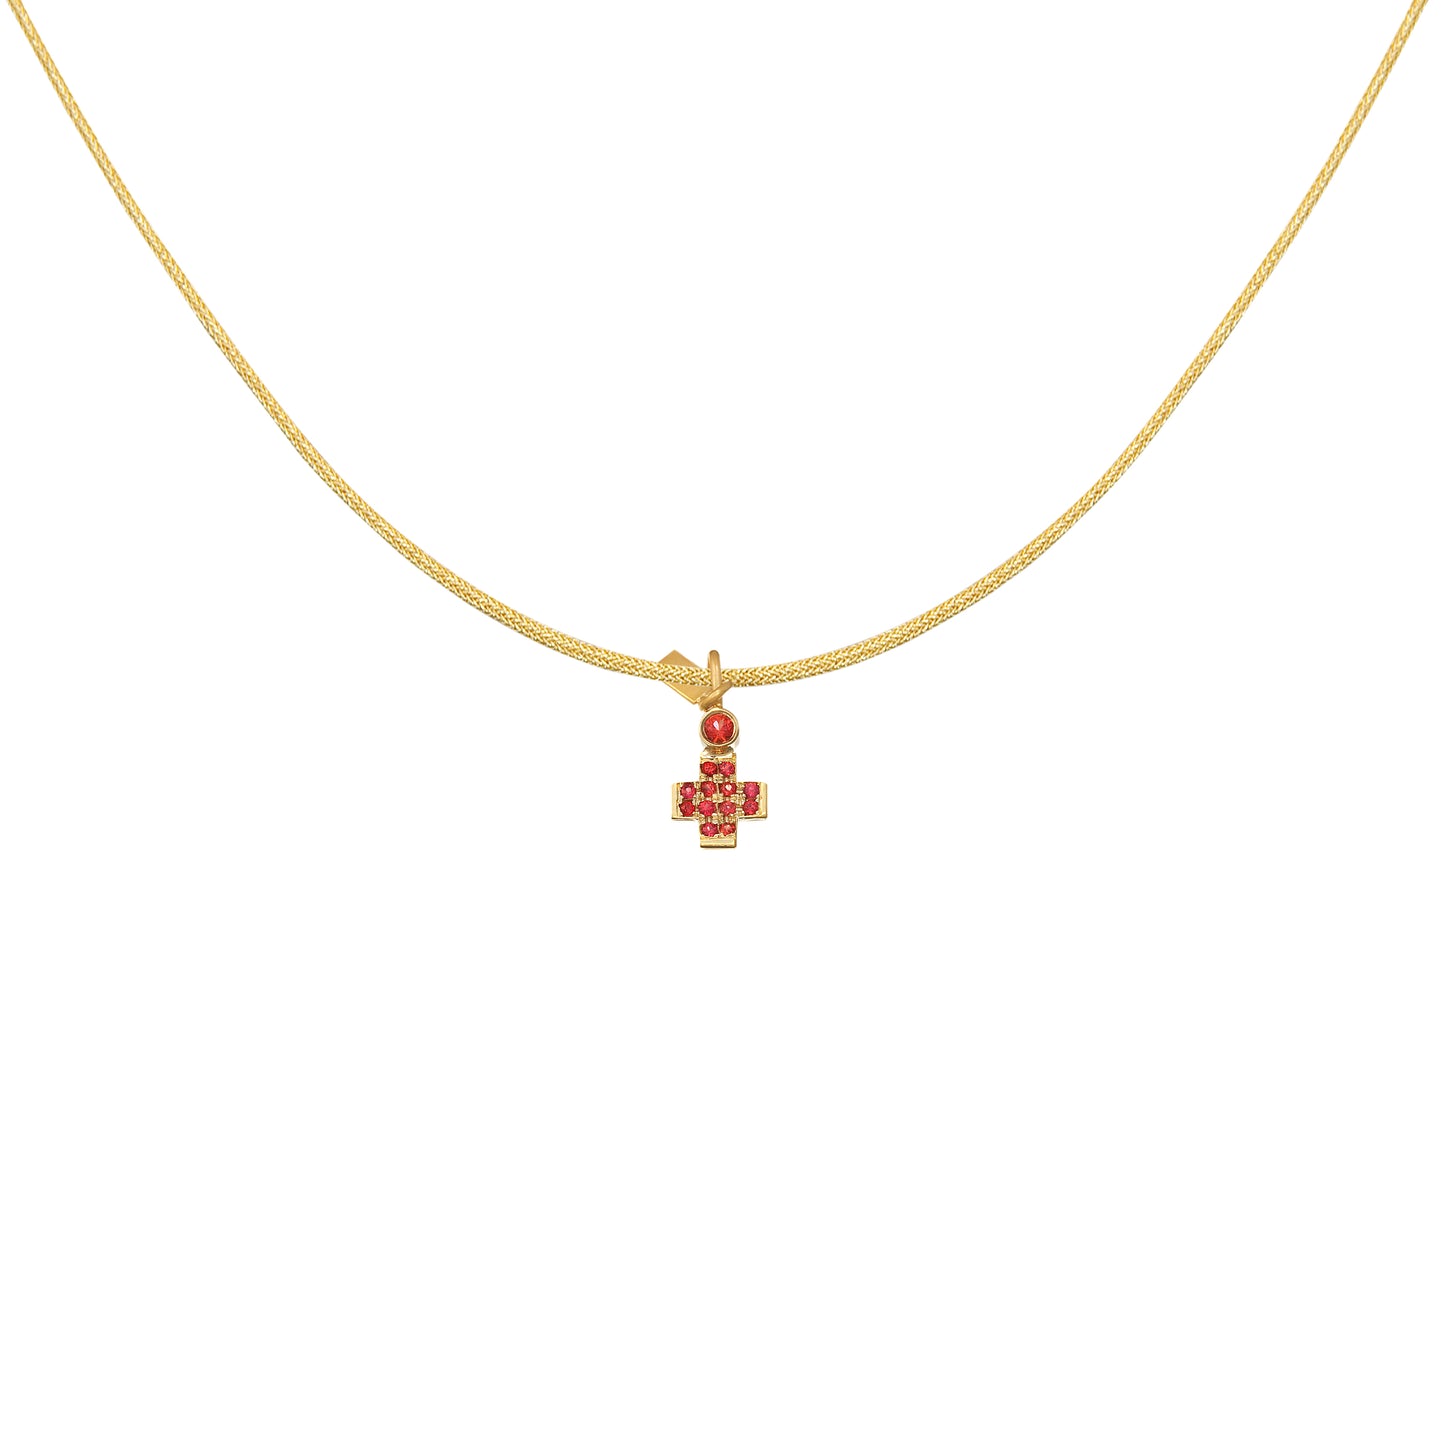 Pendant Cross small, in 18k yellow gold & orange sapphire 0.072ct & 0.044ct